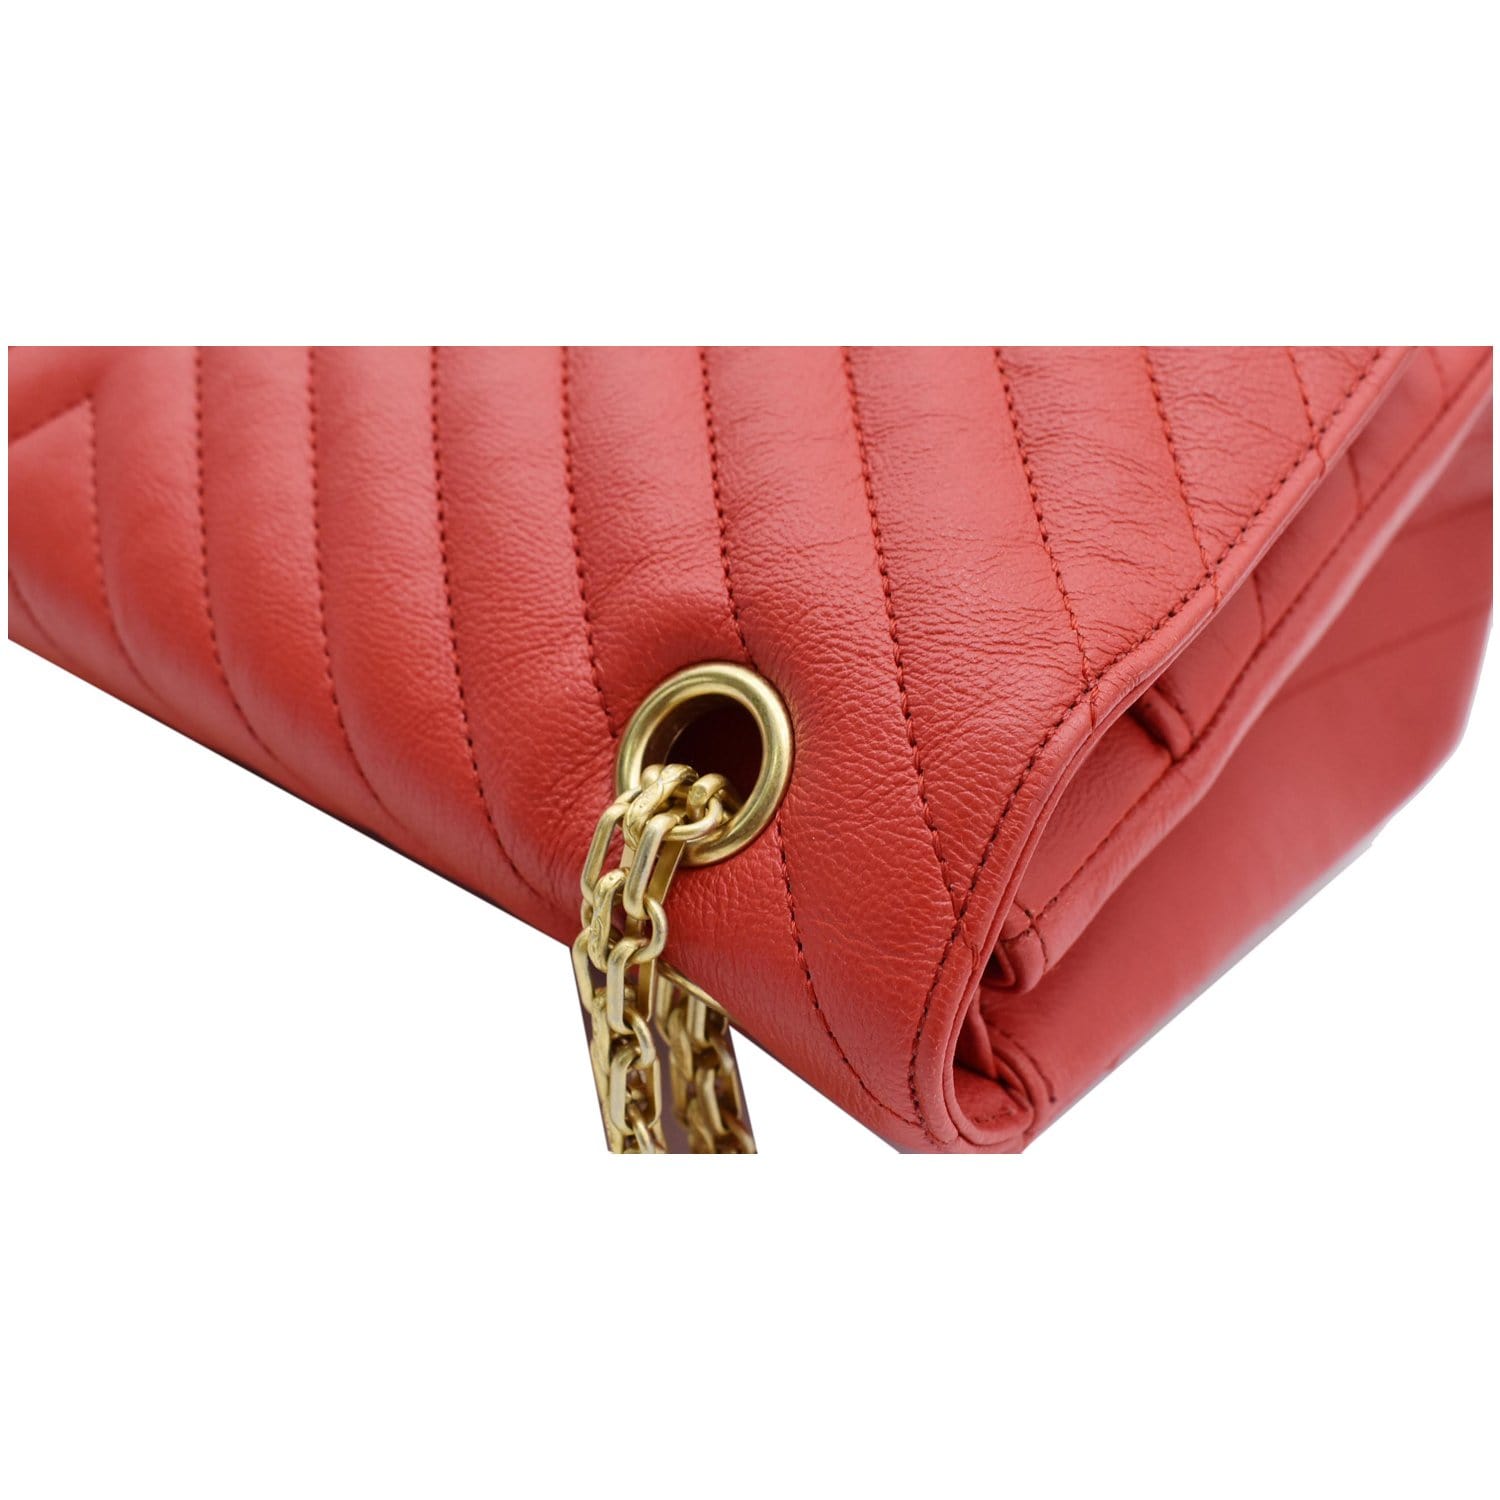 Chanel Classic Double Flap Bag Chevron Lambskin Medium Pink 21348311